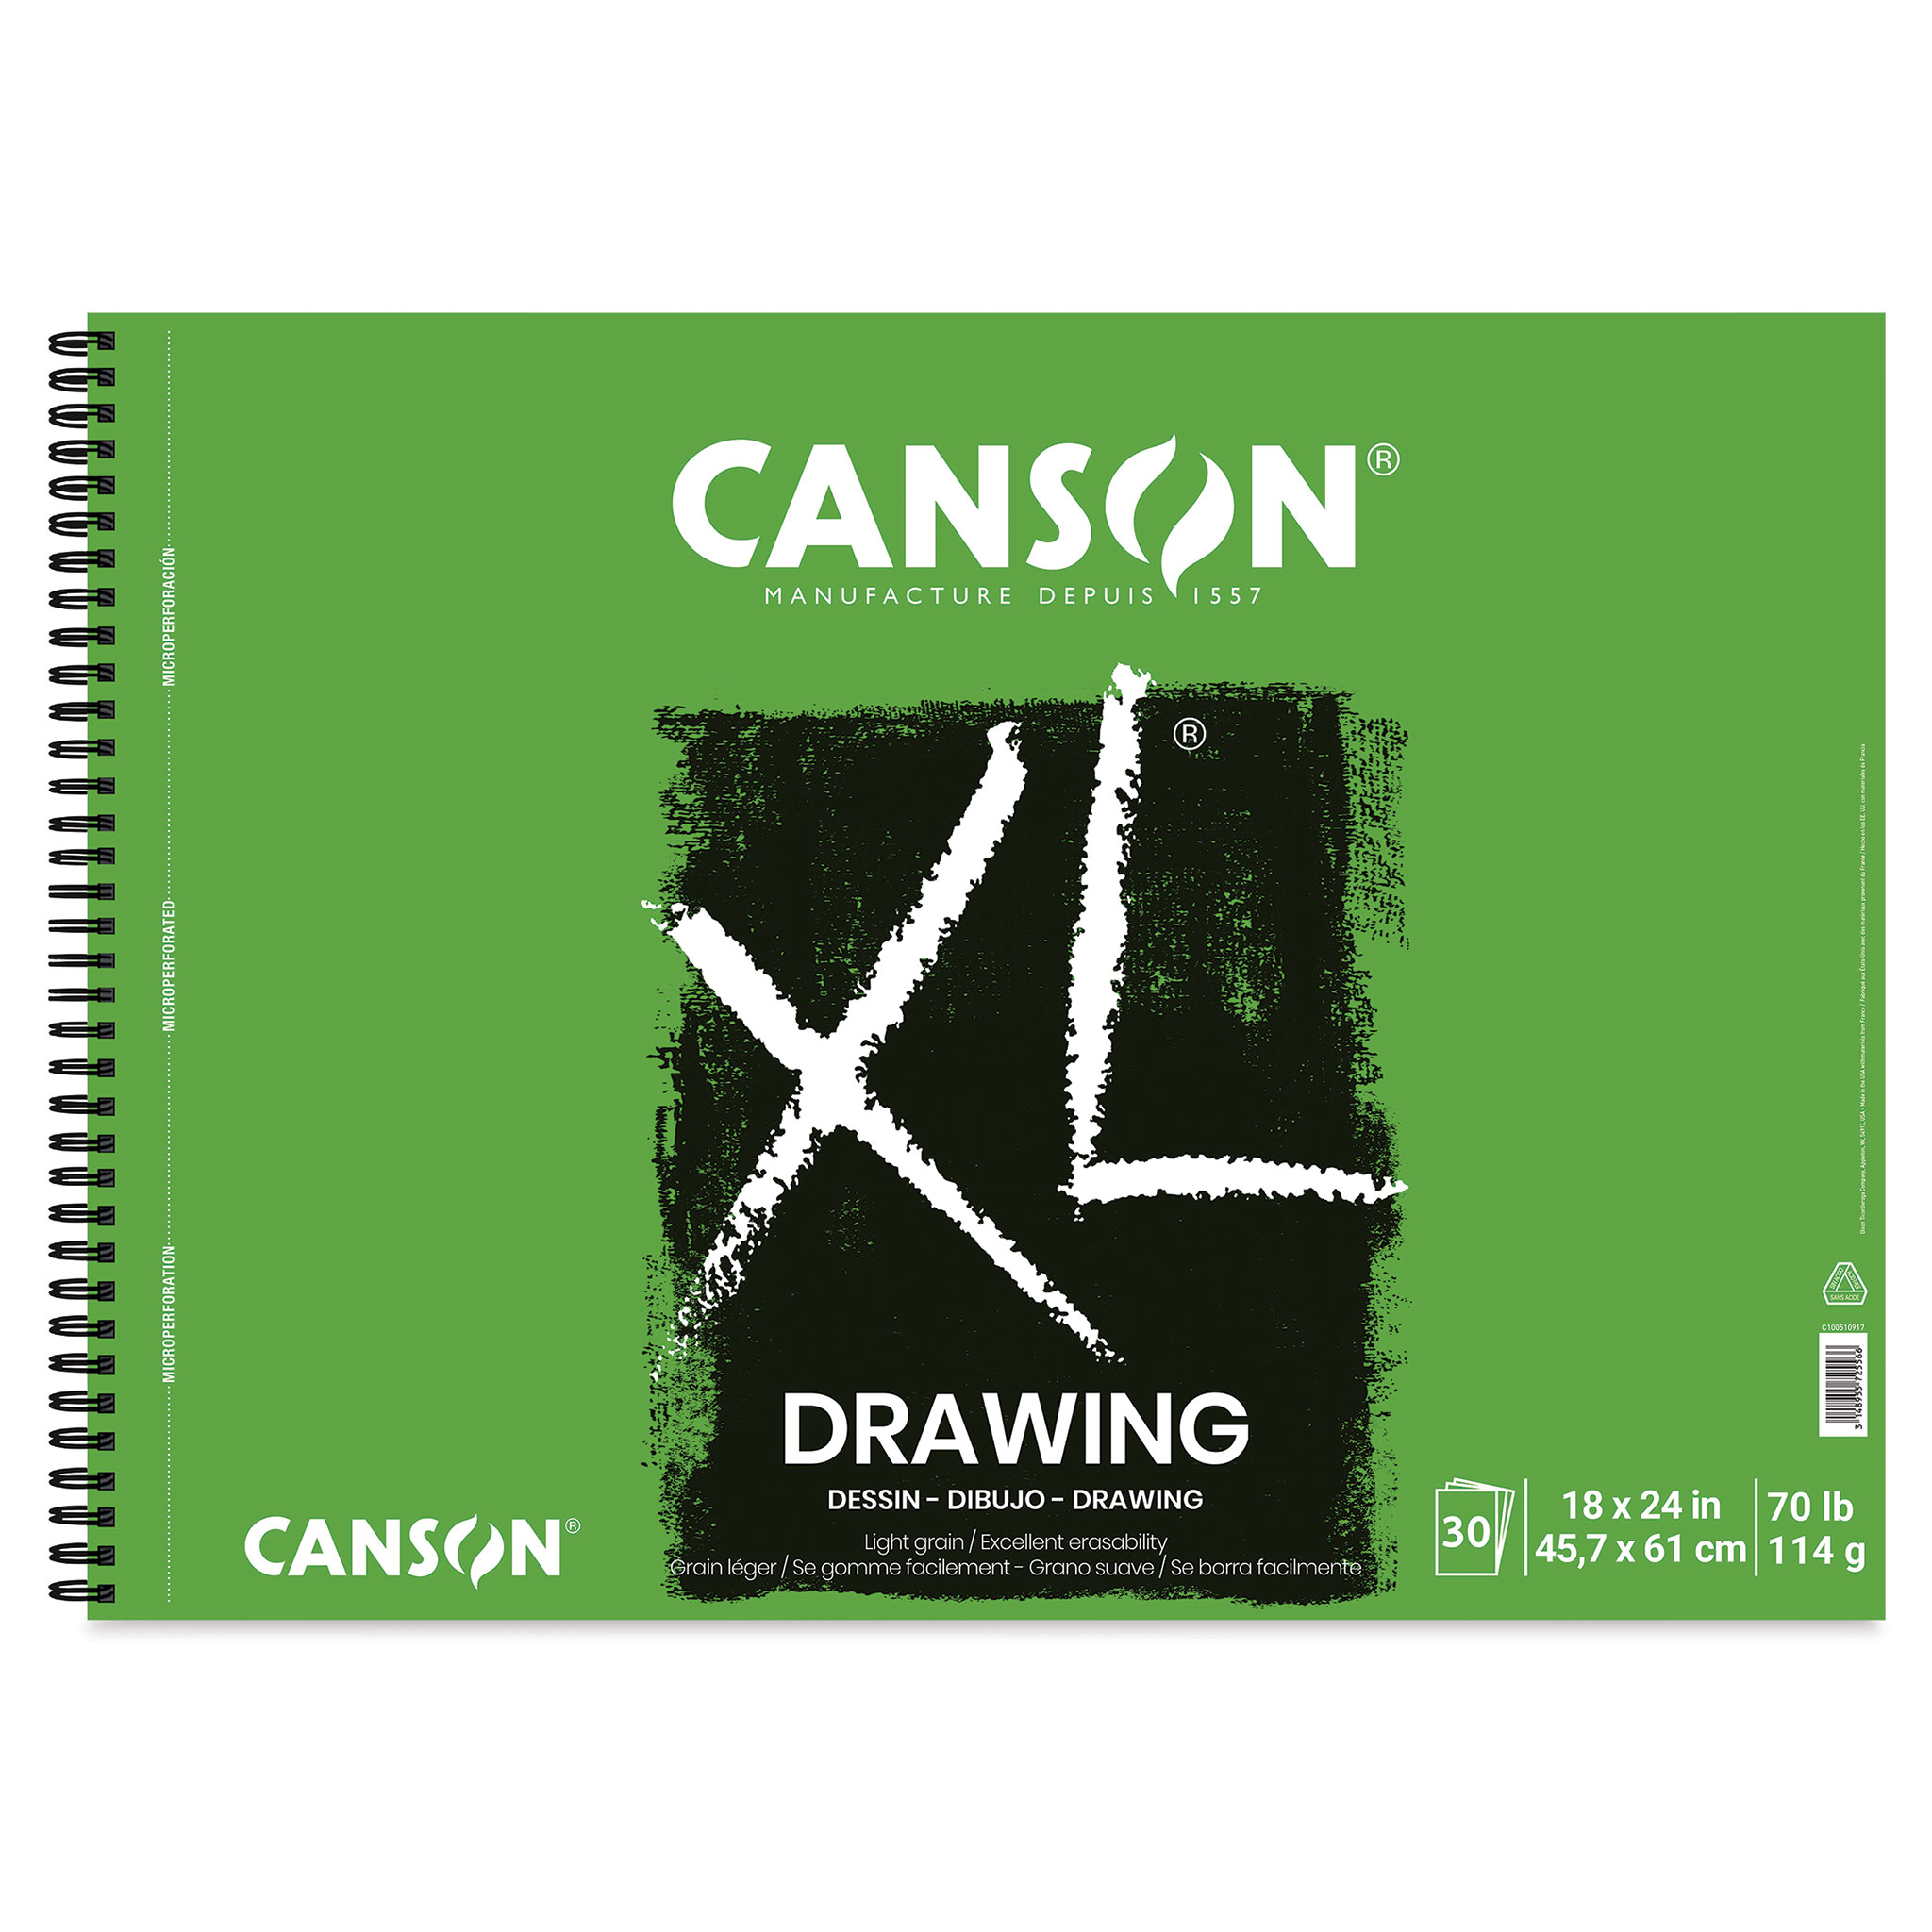 Sketching pad Canson XL Croquis - Vunder